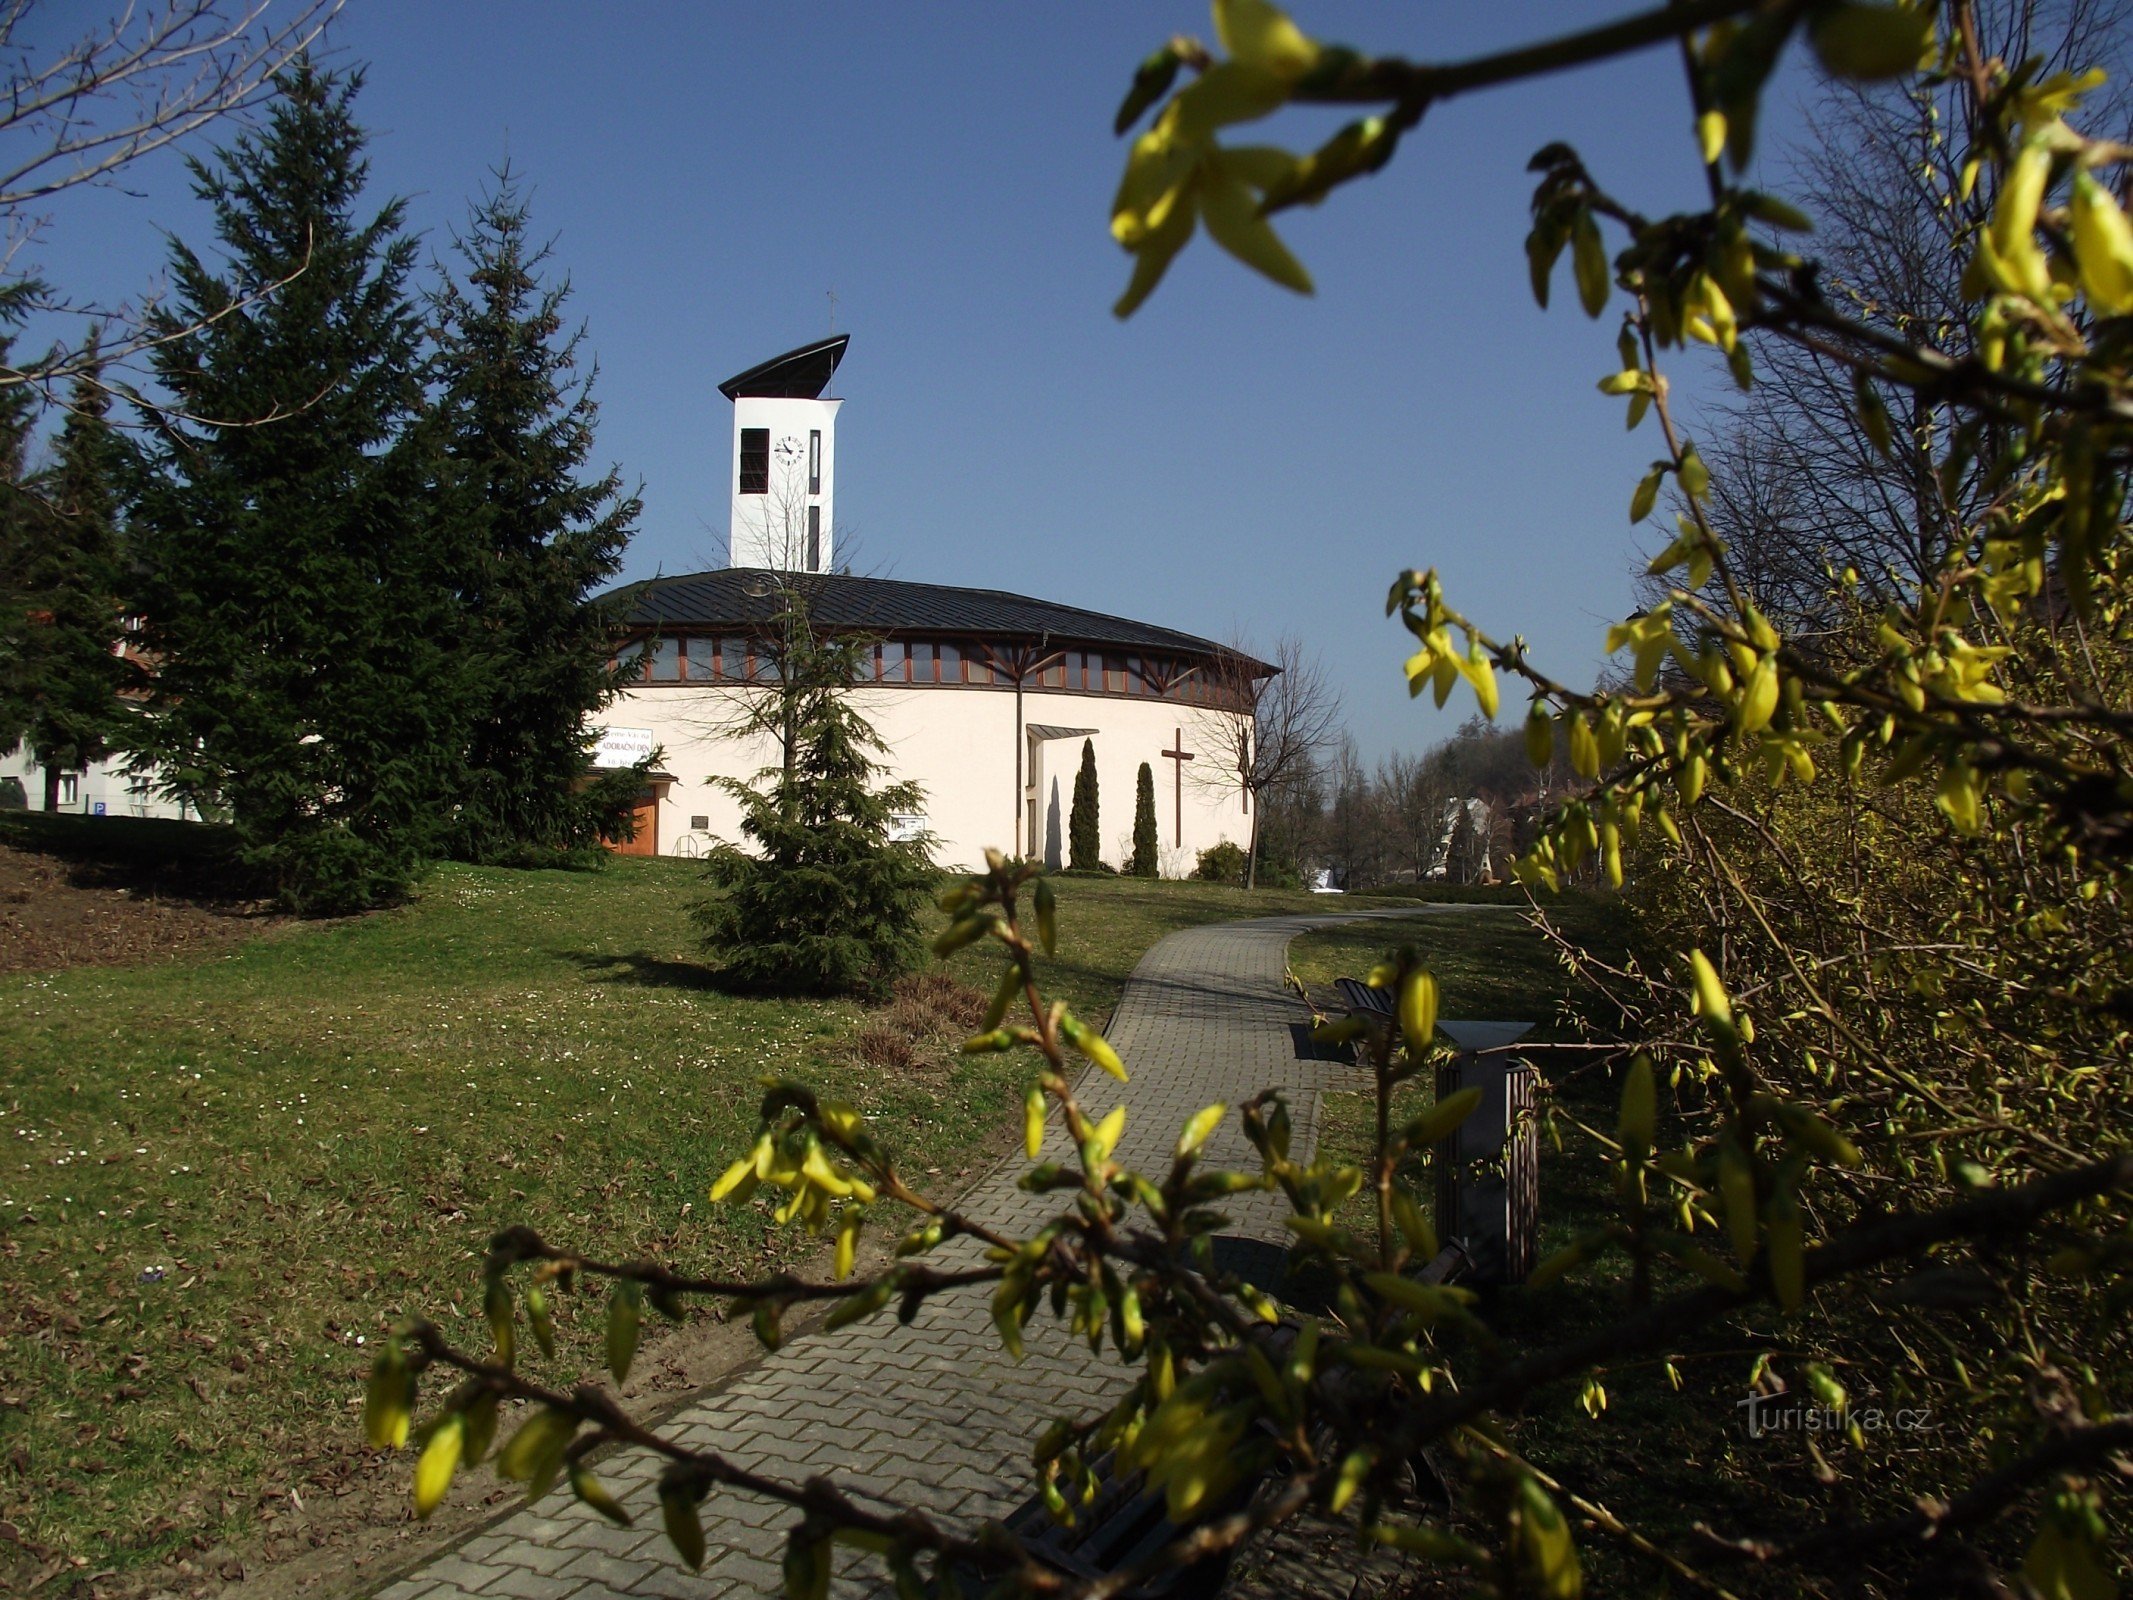 Luhačovice - Église de la Sainte Famille (Église Saint-Joseph)